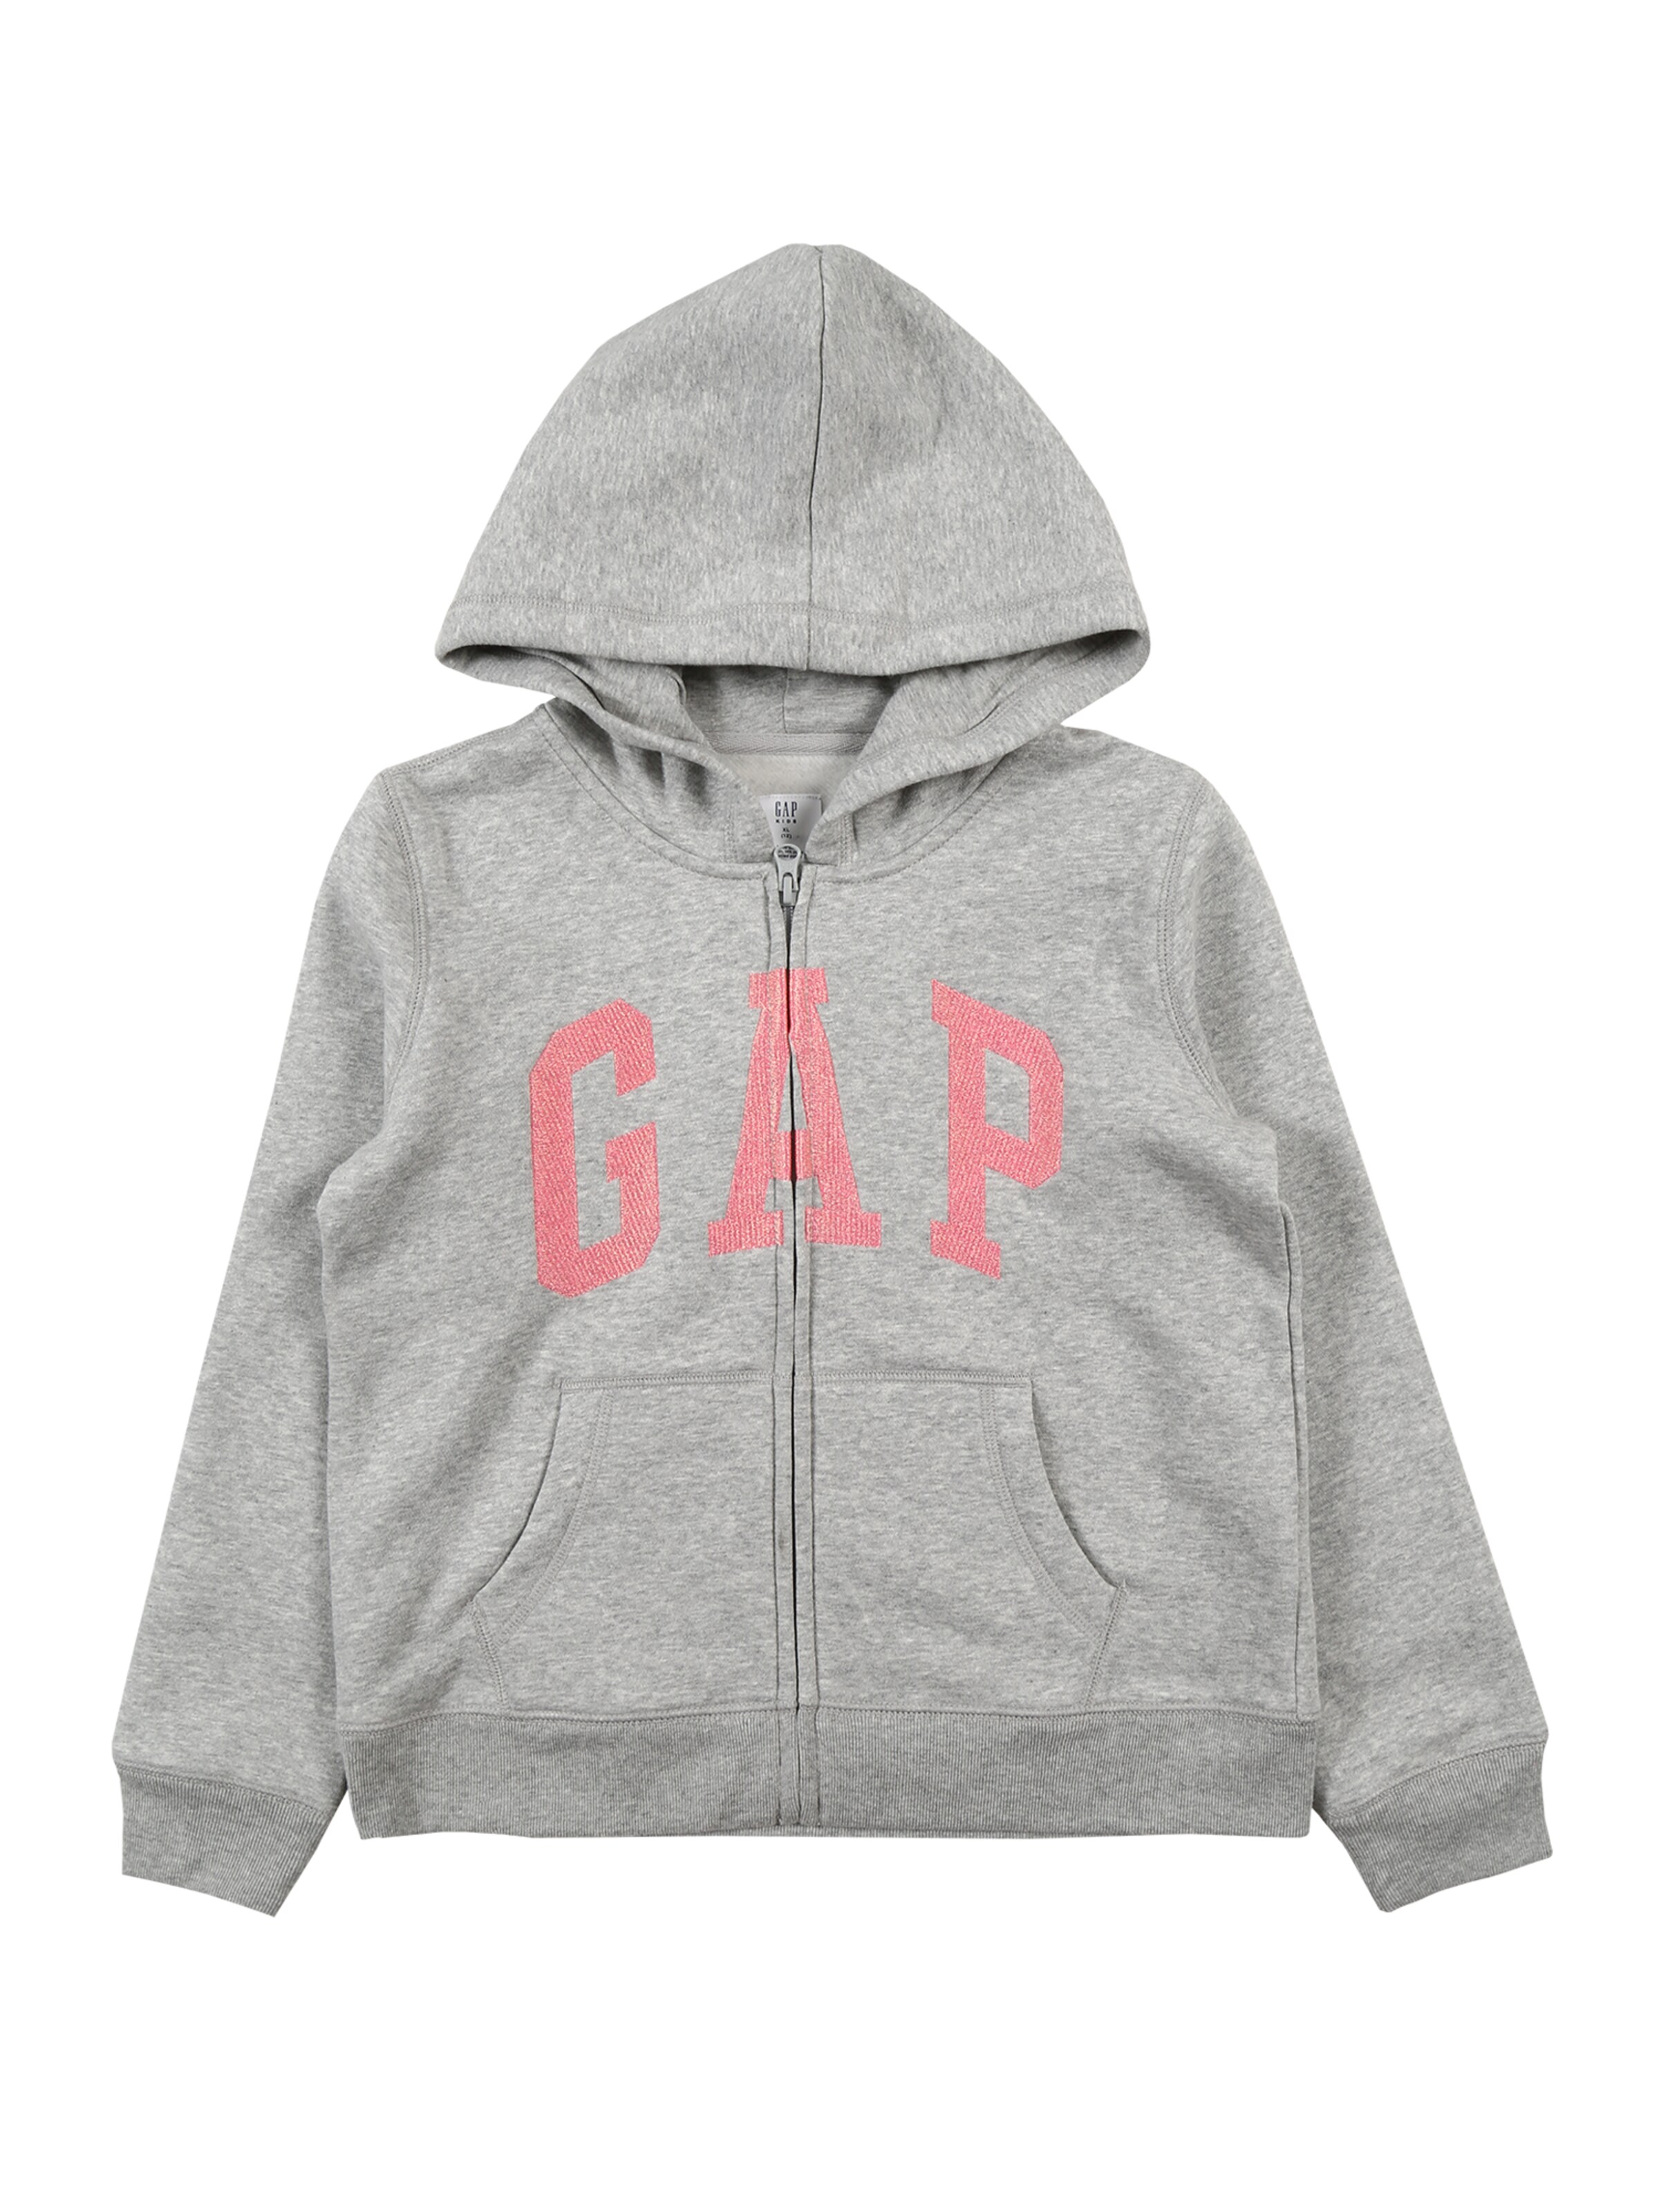 gap gray jacket